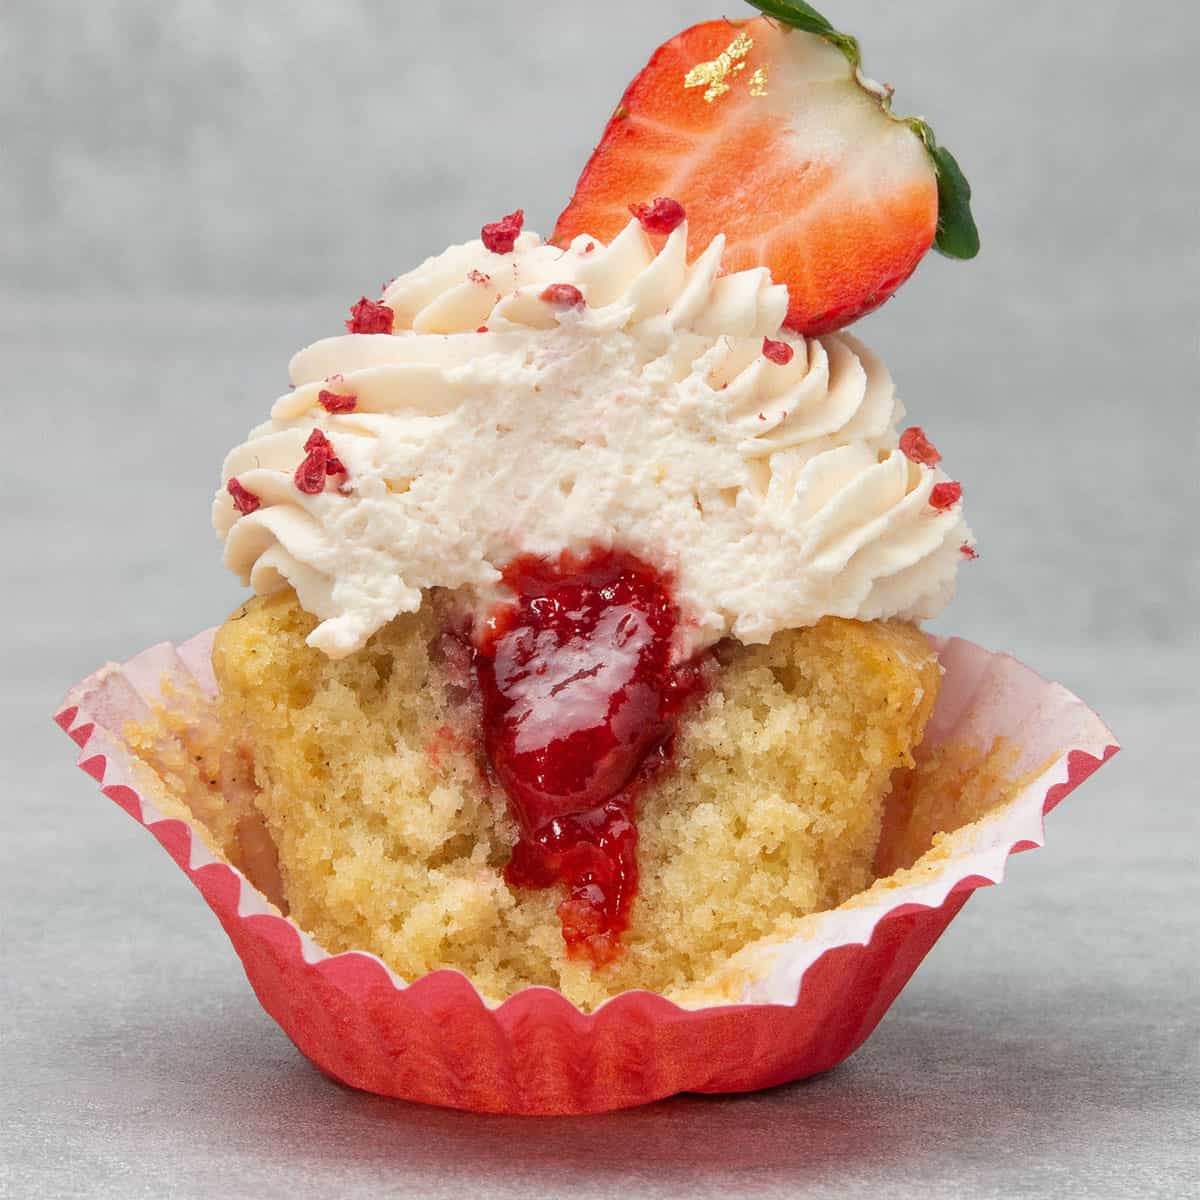 a half Strawberry filled cupcake.